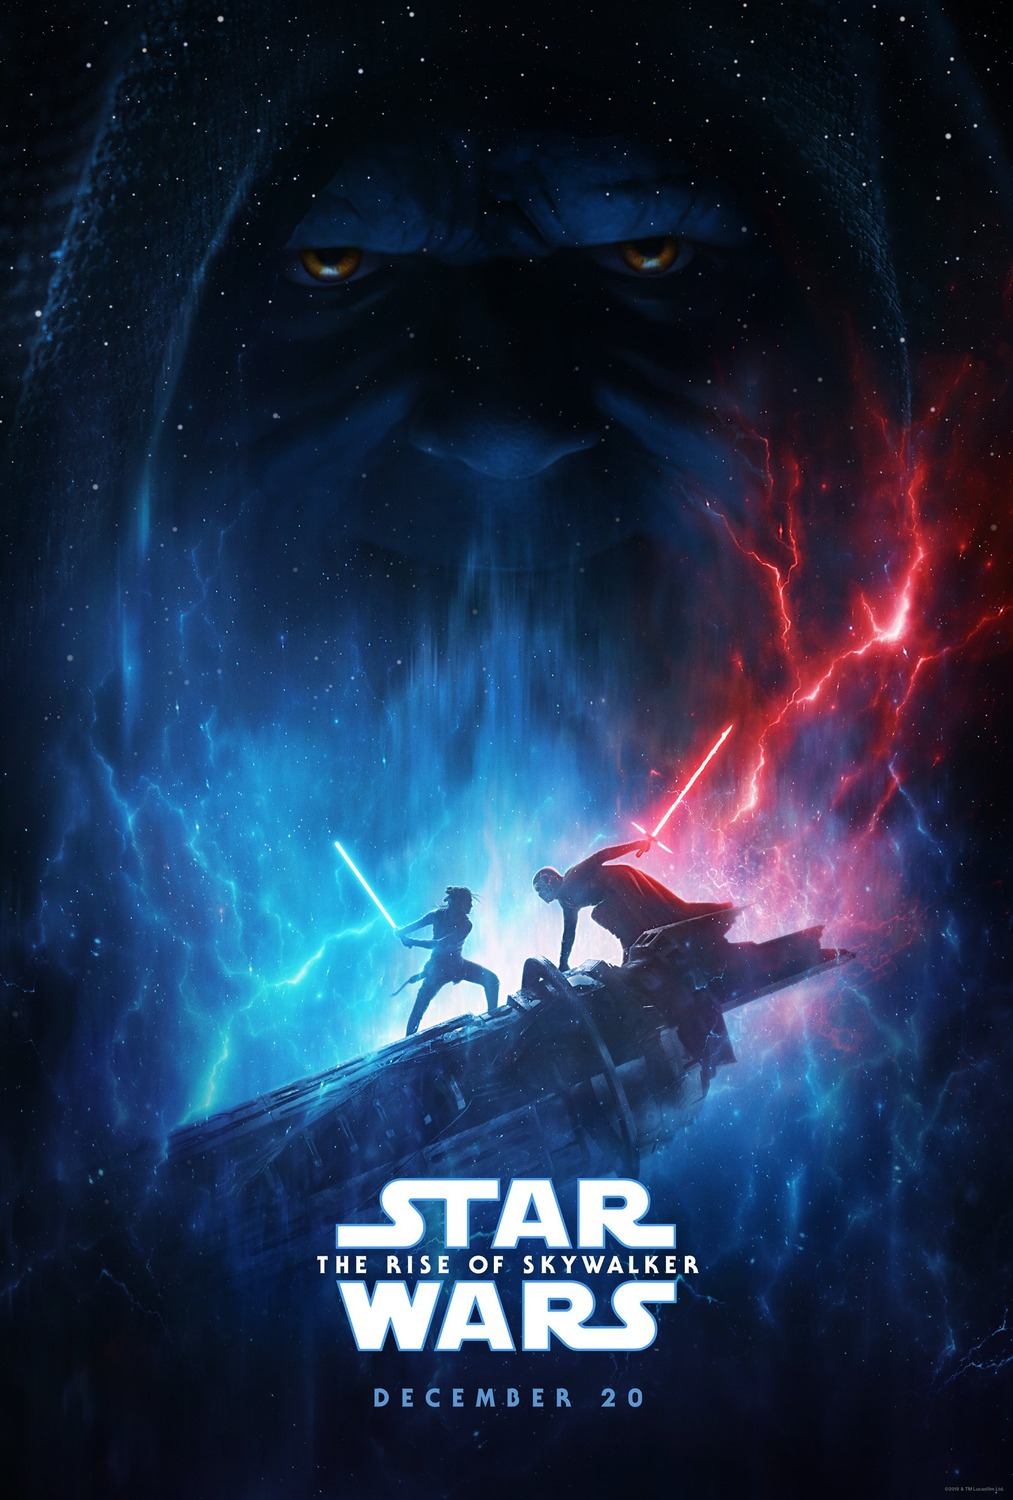 Movie Poster Star Wars 2019 Year Movies Emperor Palpatine Star Wars Episode IX The Rise Of Skywalker 1013x1500